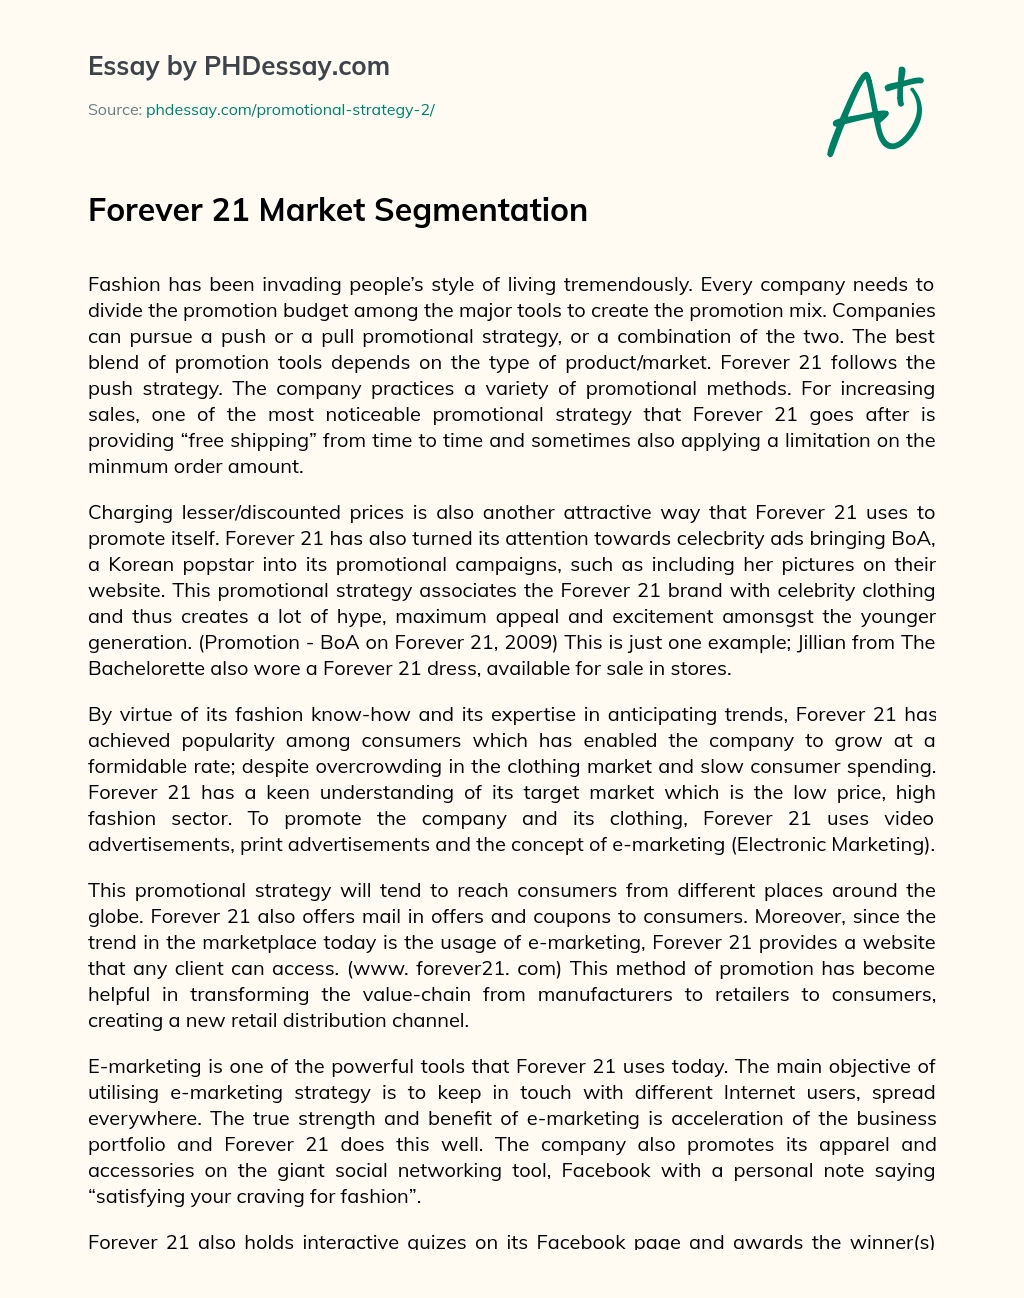 Forever 21 Market Segmentation essay